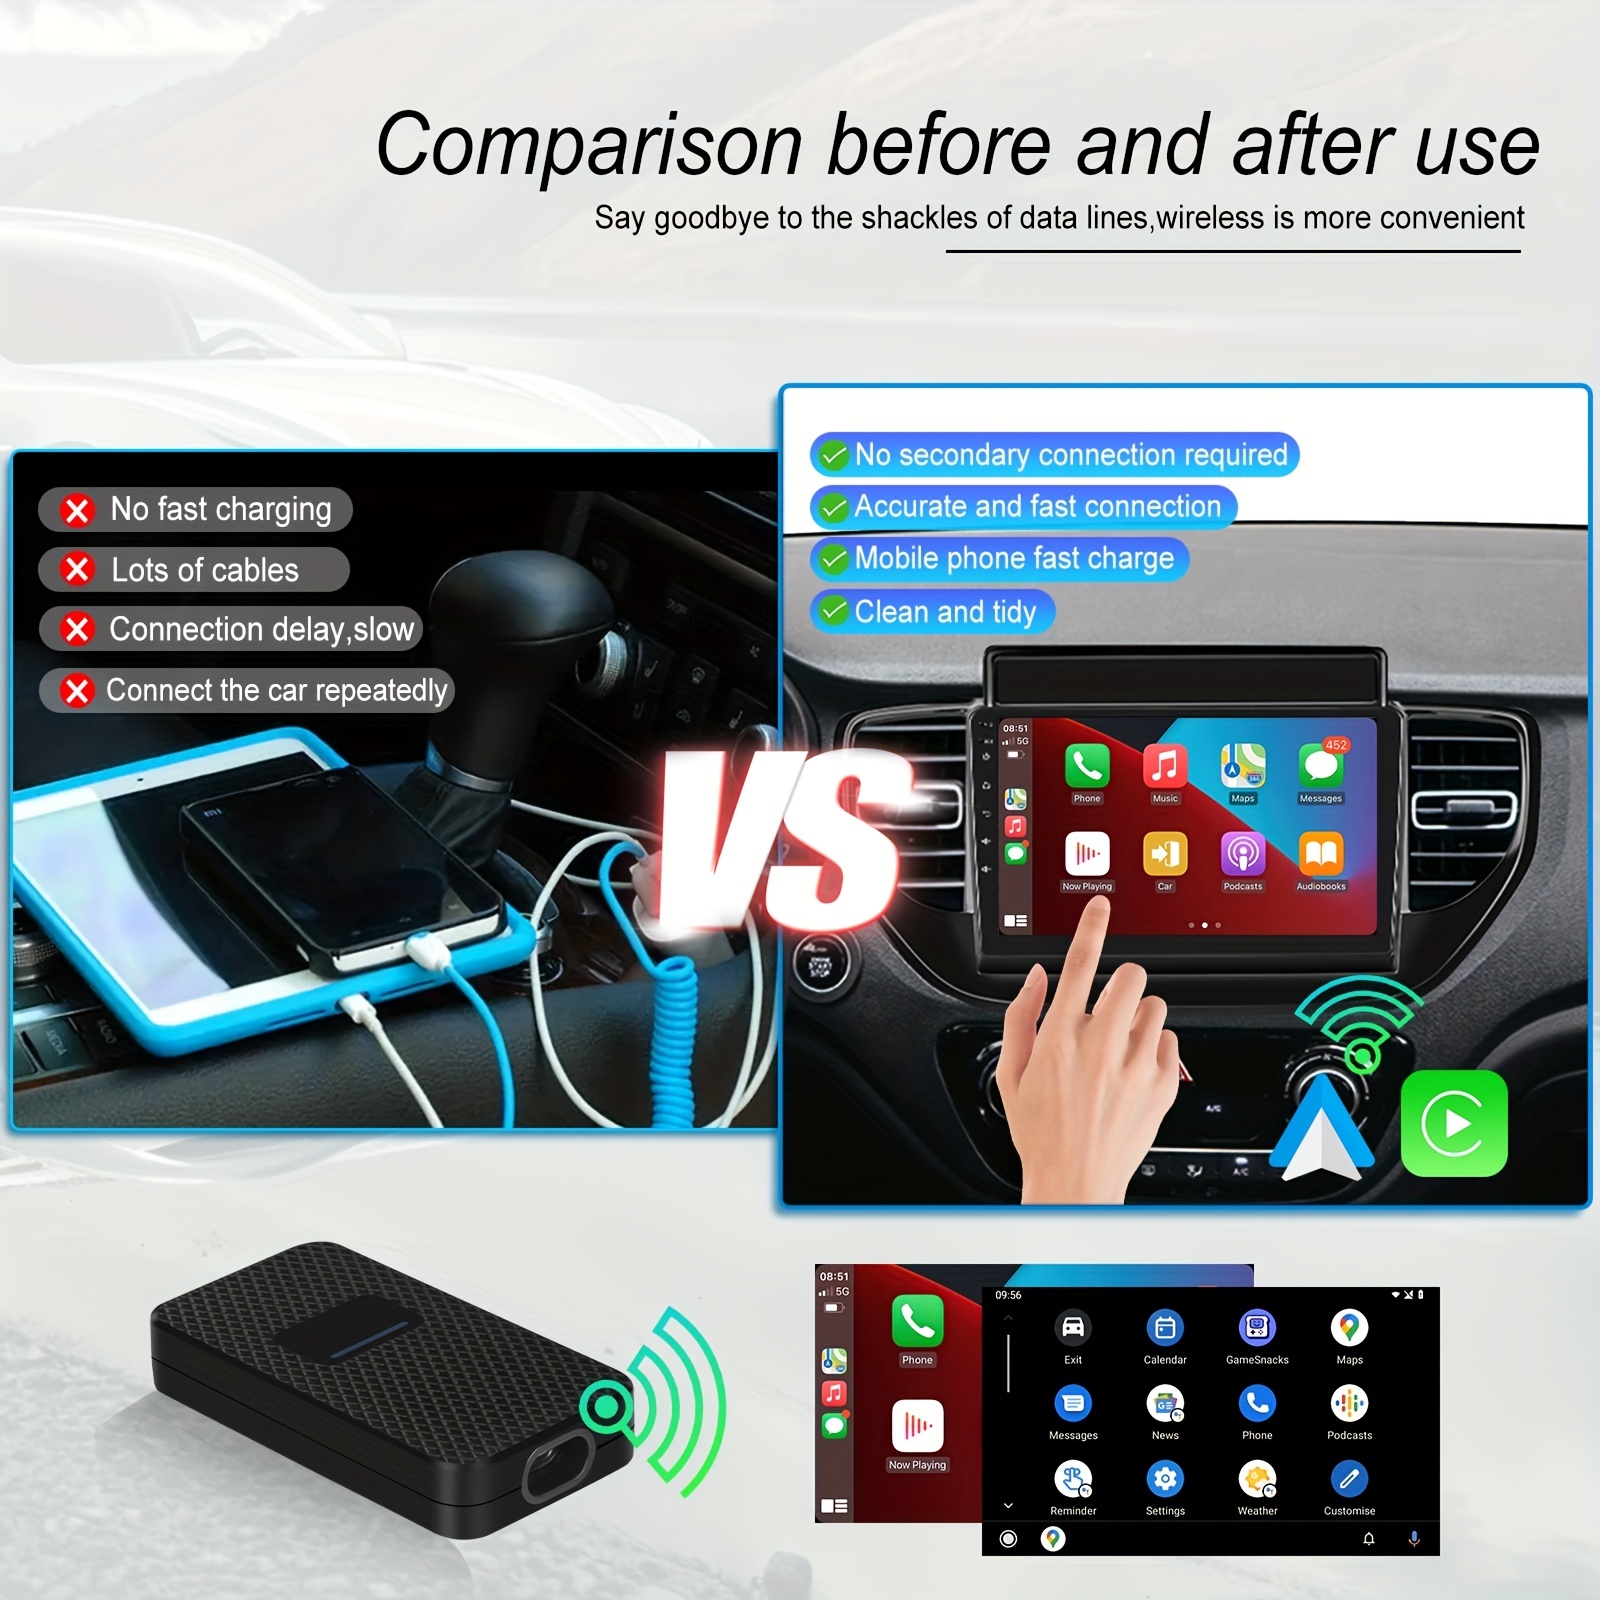 Wireless USB Android Auto & USB Apple Carplay Dongle USB Adaptor +